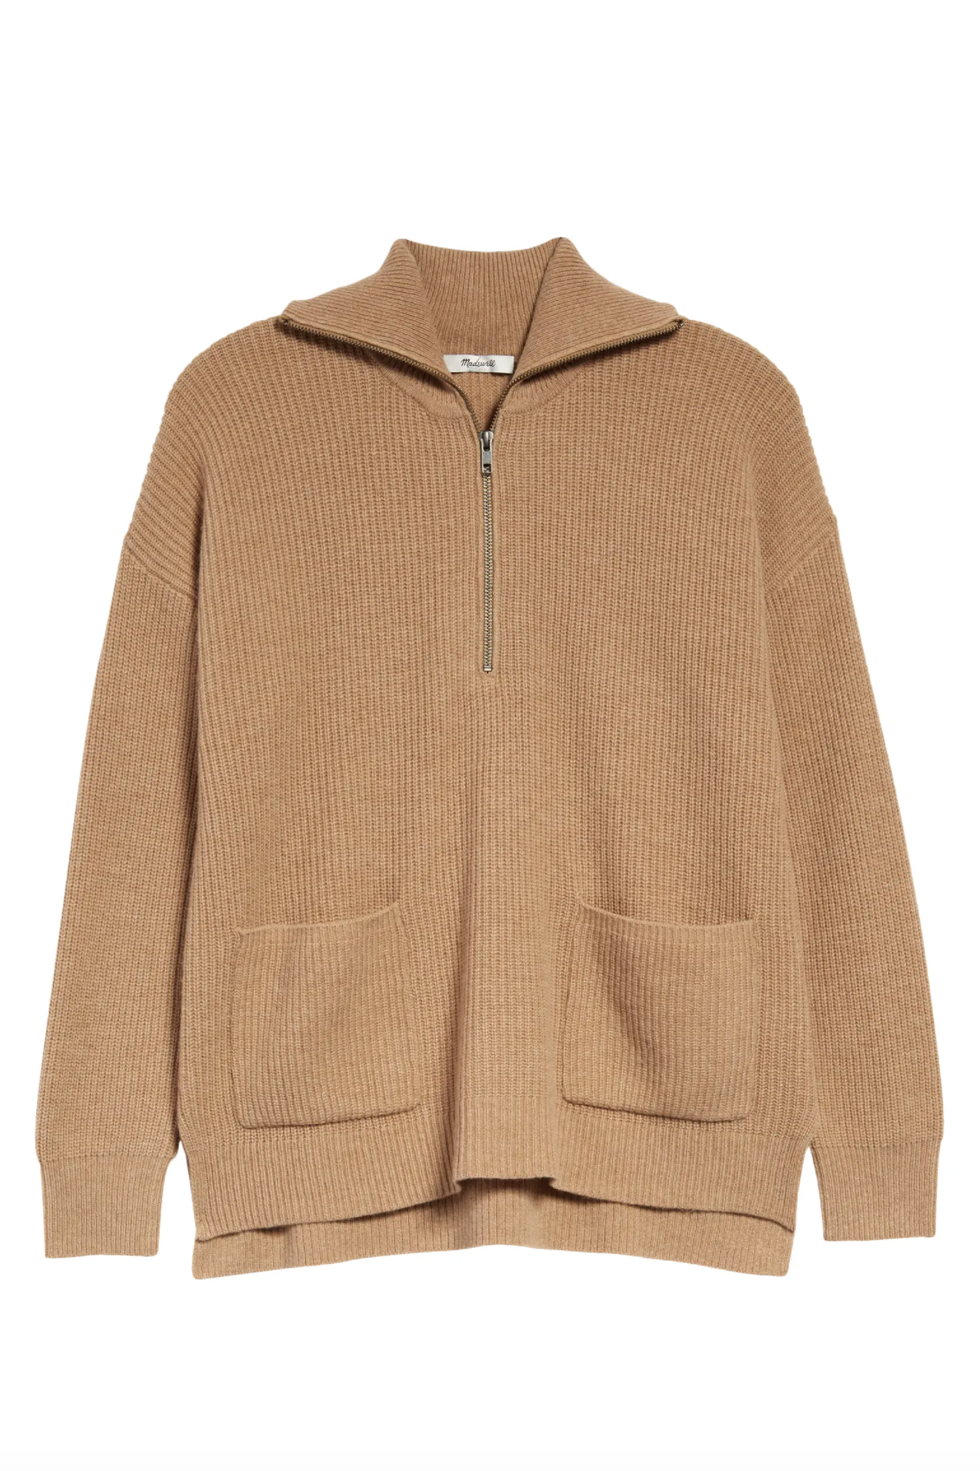 Glenbrook Half Zip Wool Blend Sweater